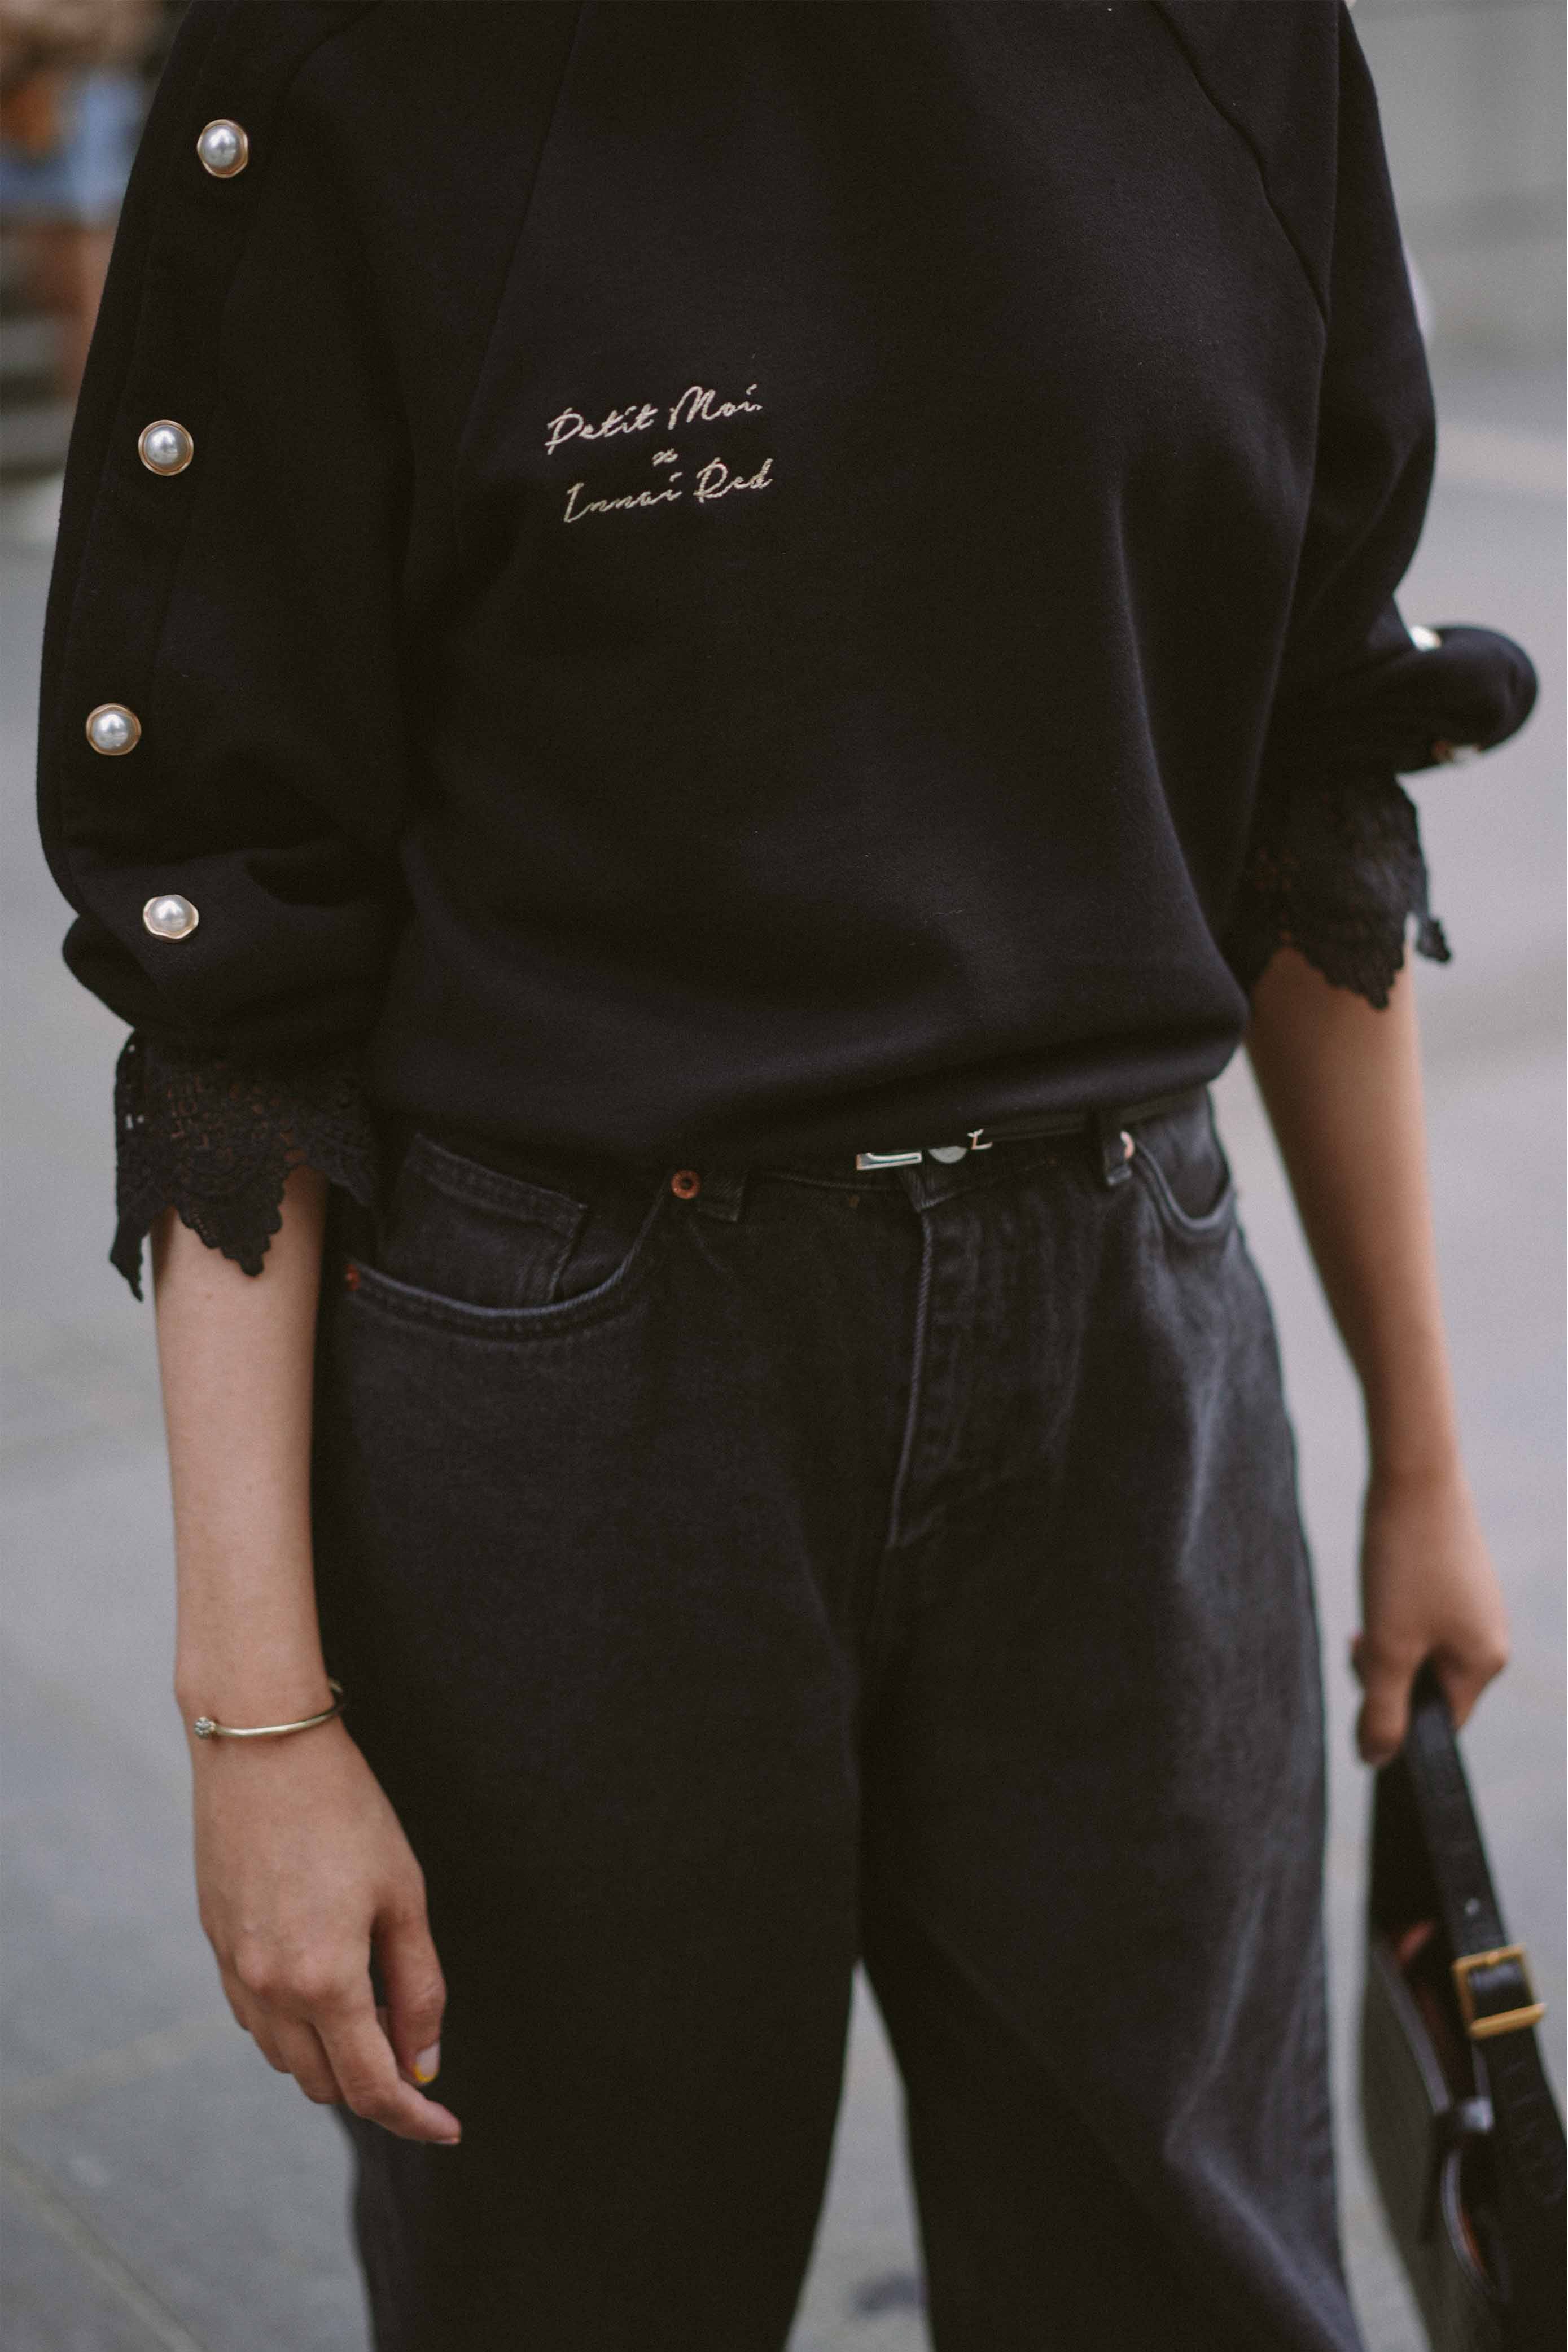 Closeup shot of black jumper worn by female model